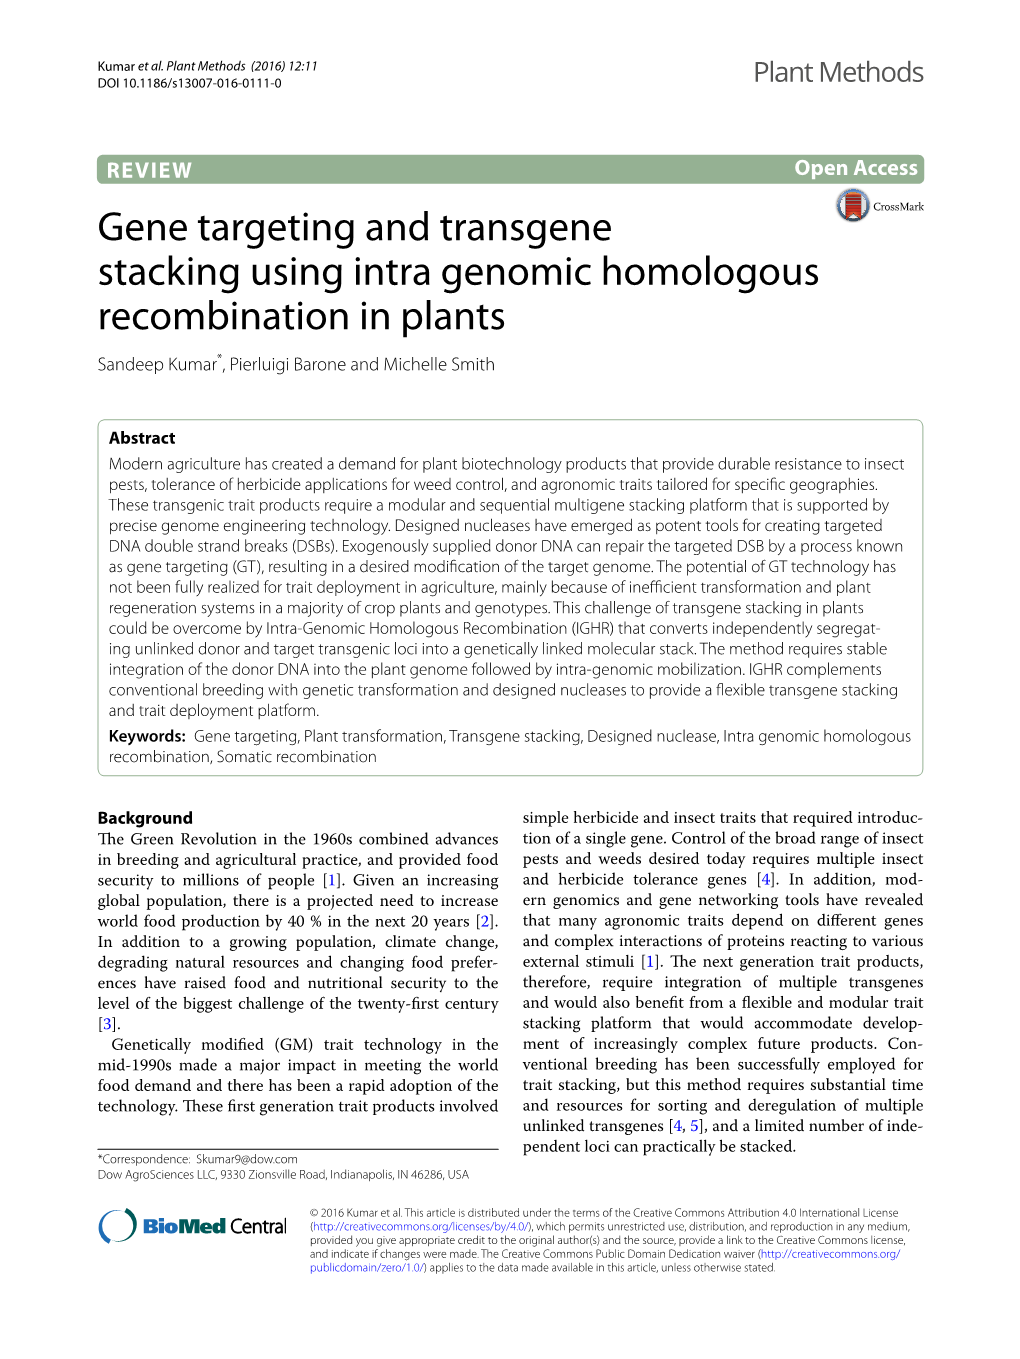 Gene Targeting and Transgene Stacking Using Intra Genomic Homologous Recombination in Plants Sandeep Kumar*, Pierluigi Barone and Michelle Smith